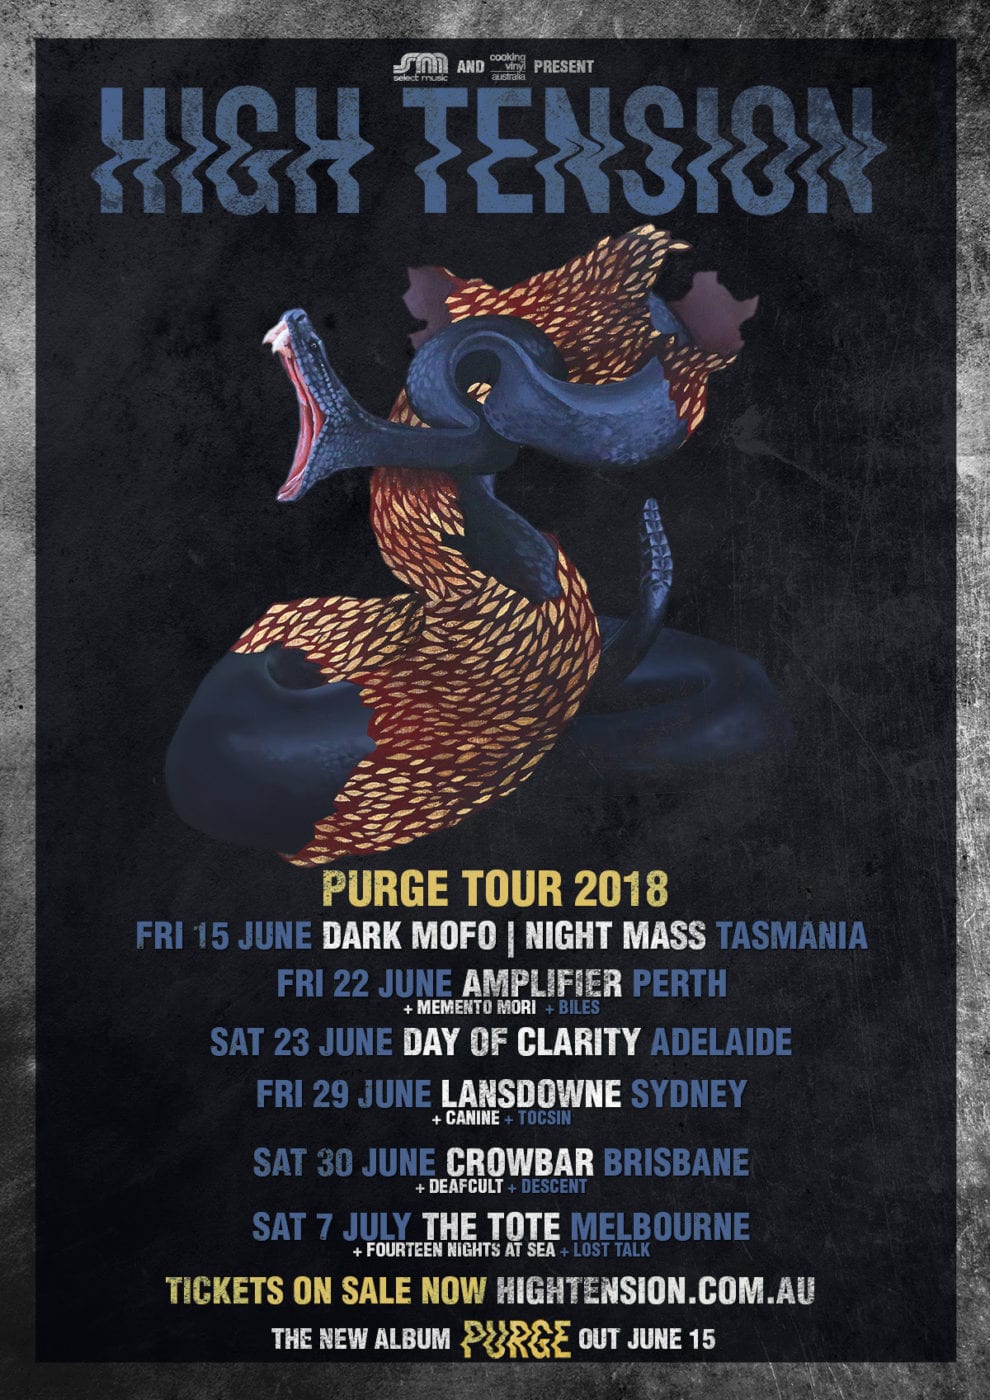 HIGH TENSION Purge Tour Dates